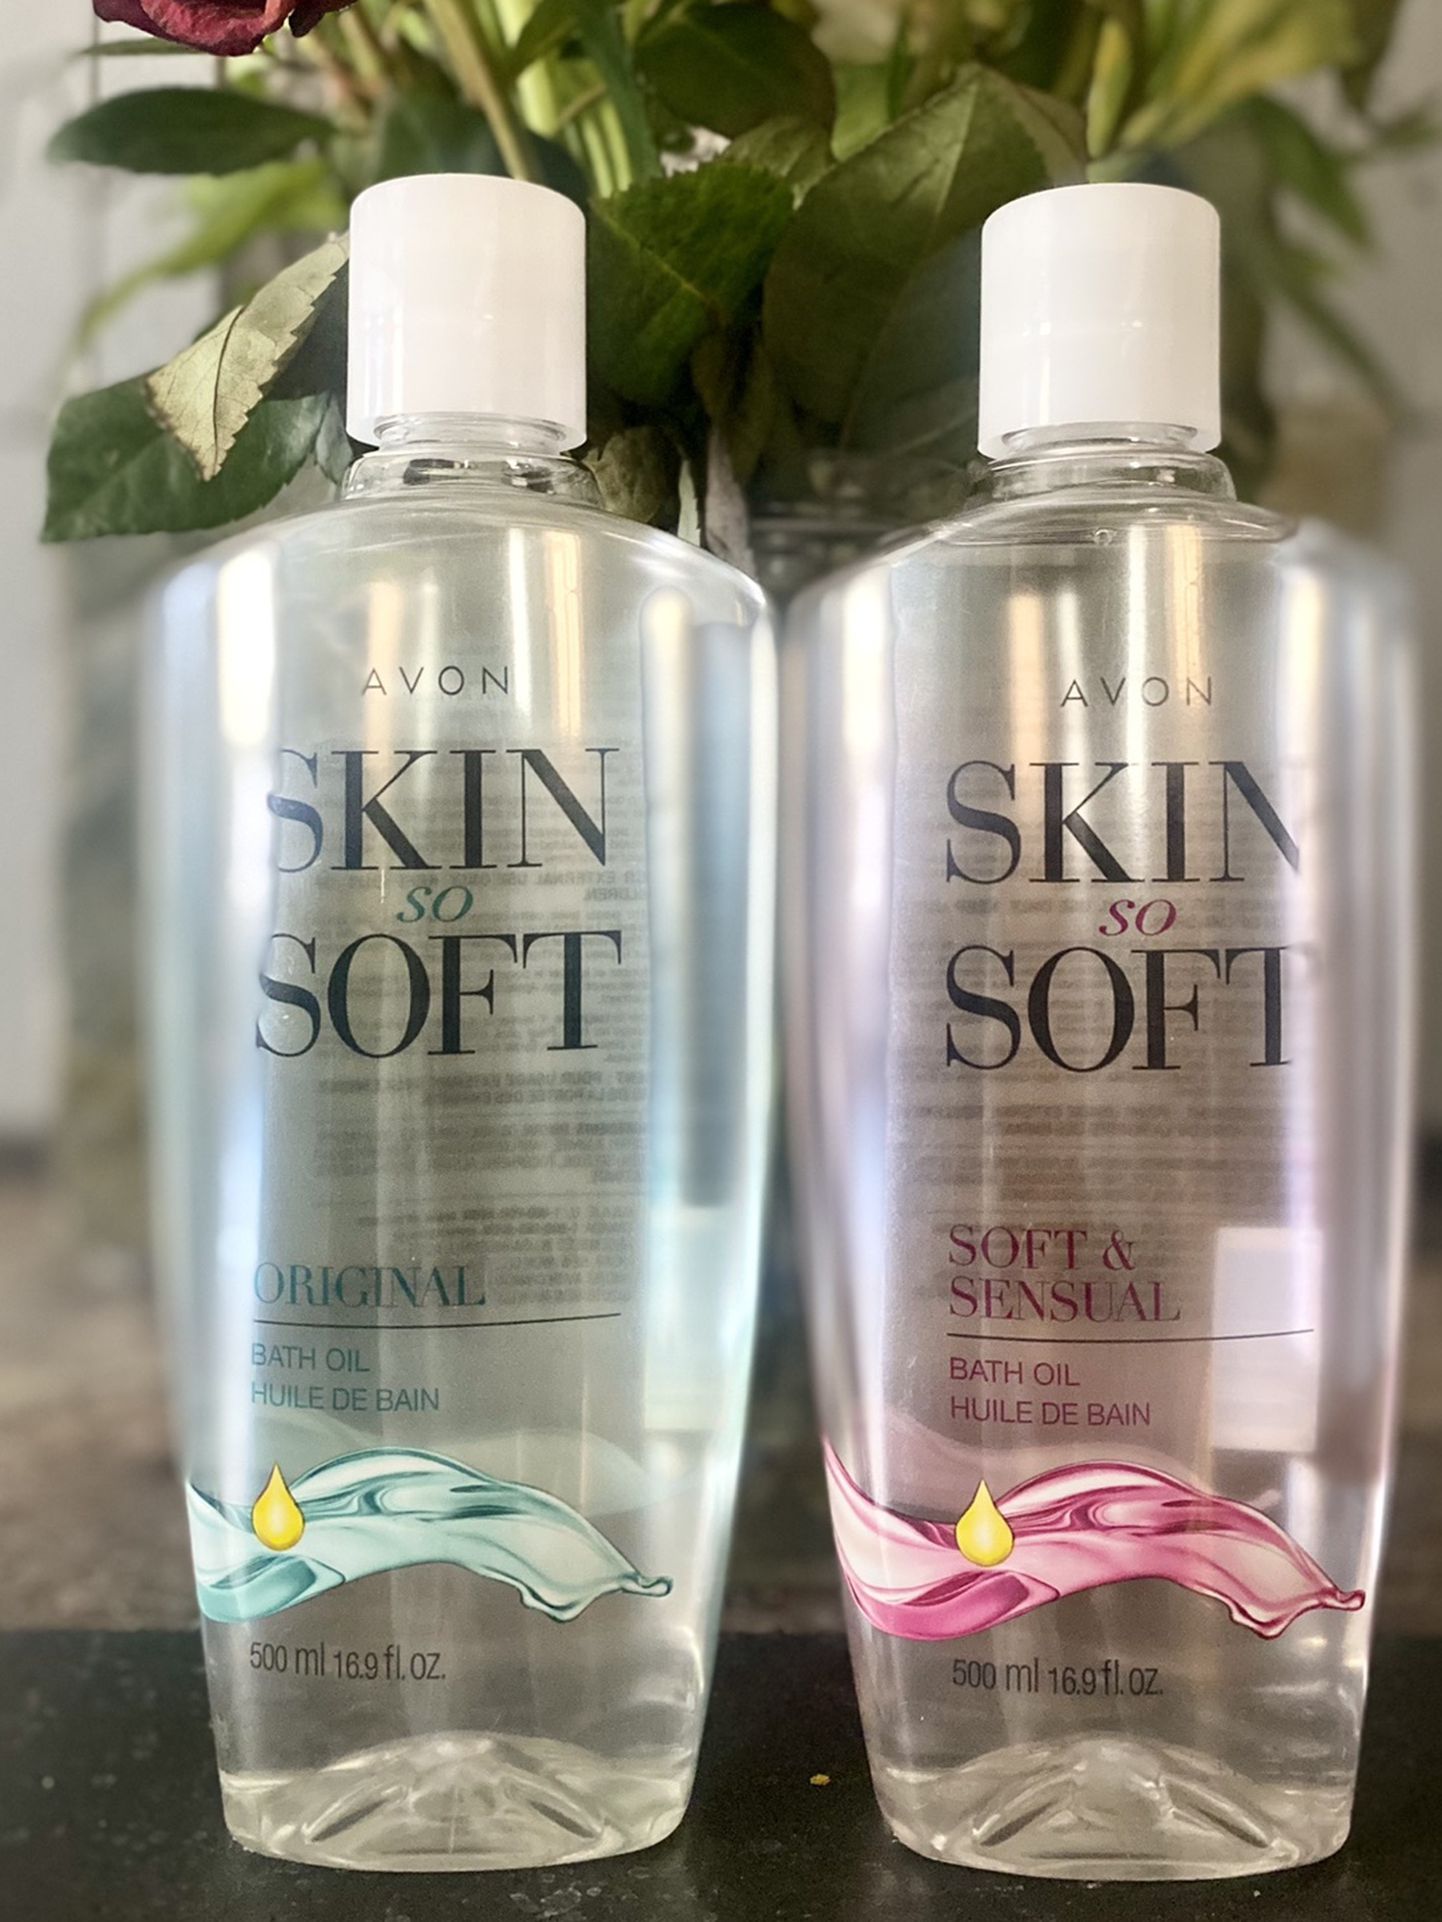 Avon Skin So Soft - Original & Soft and Sensual Bath Oil Bundle